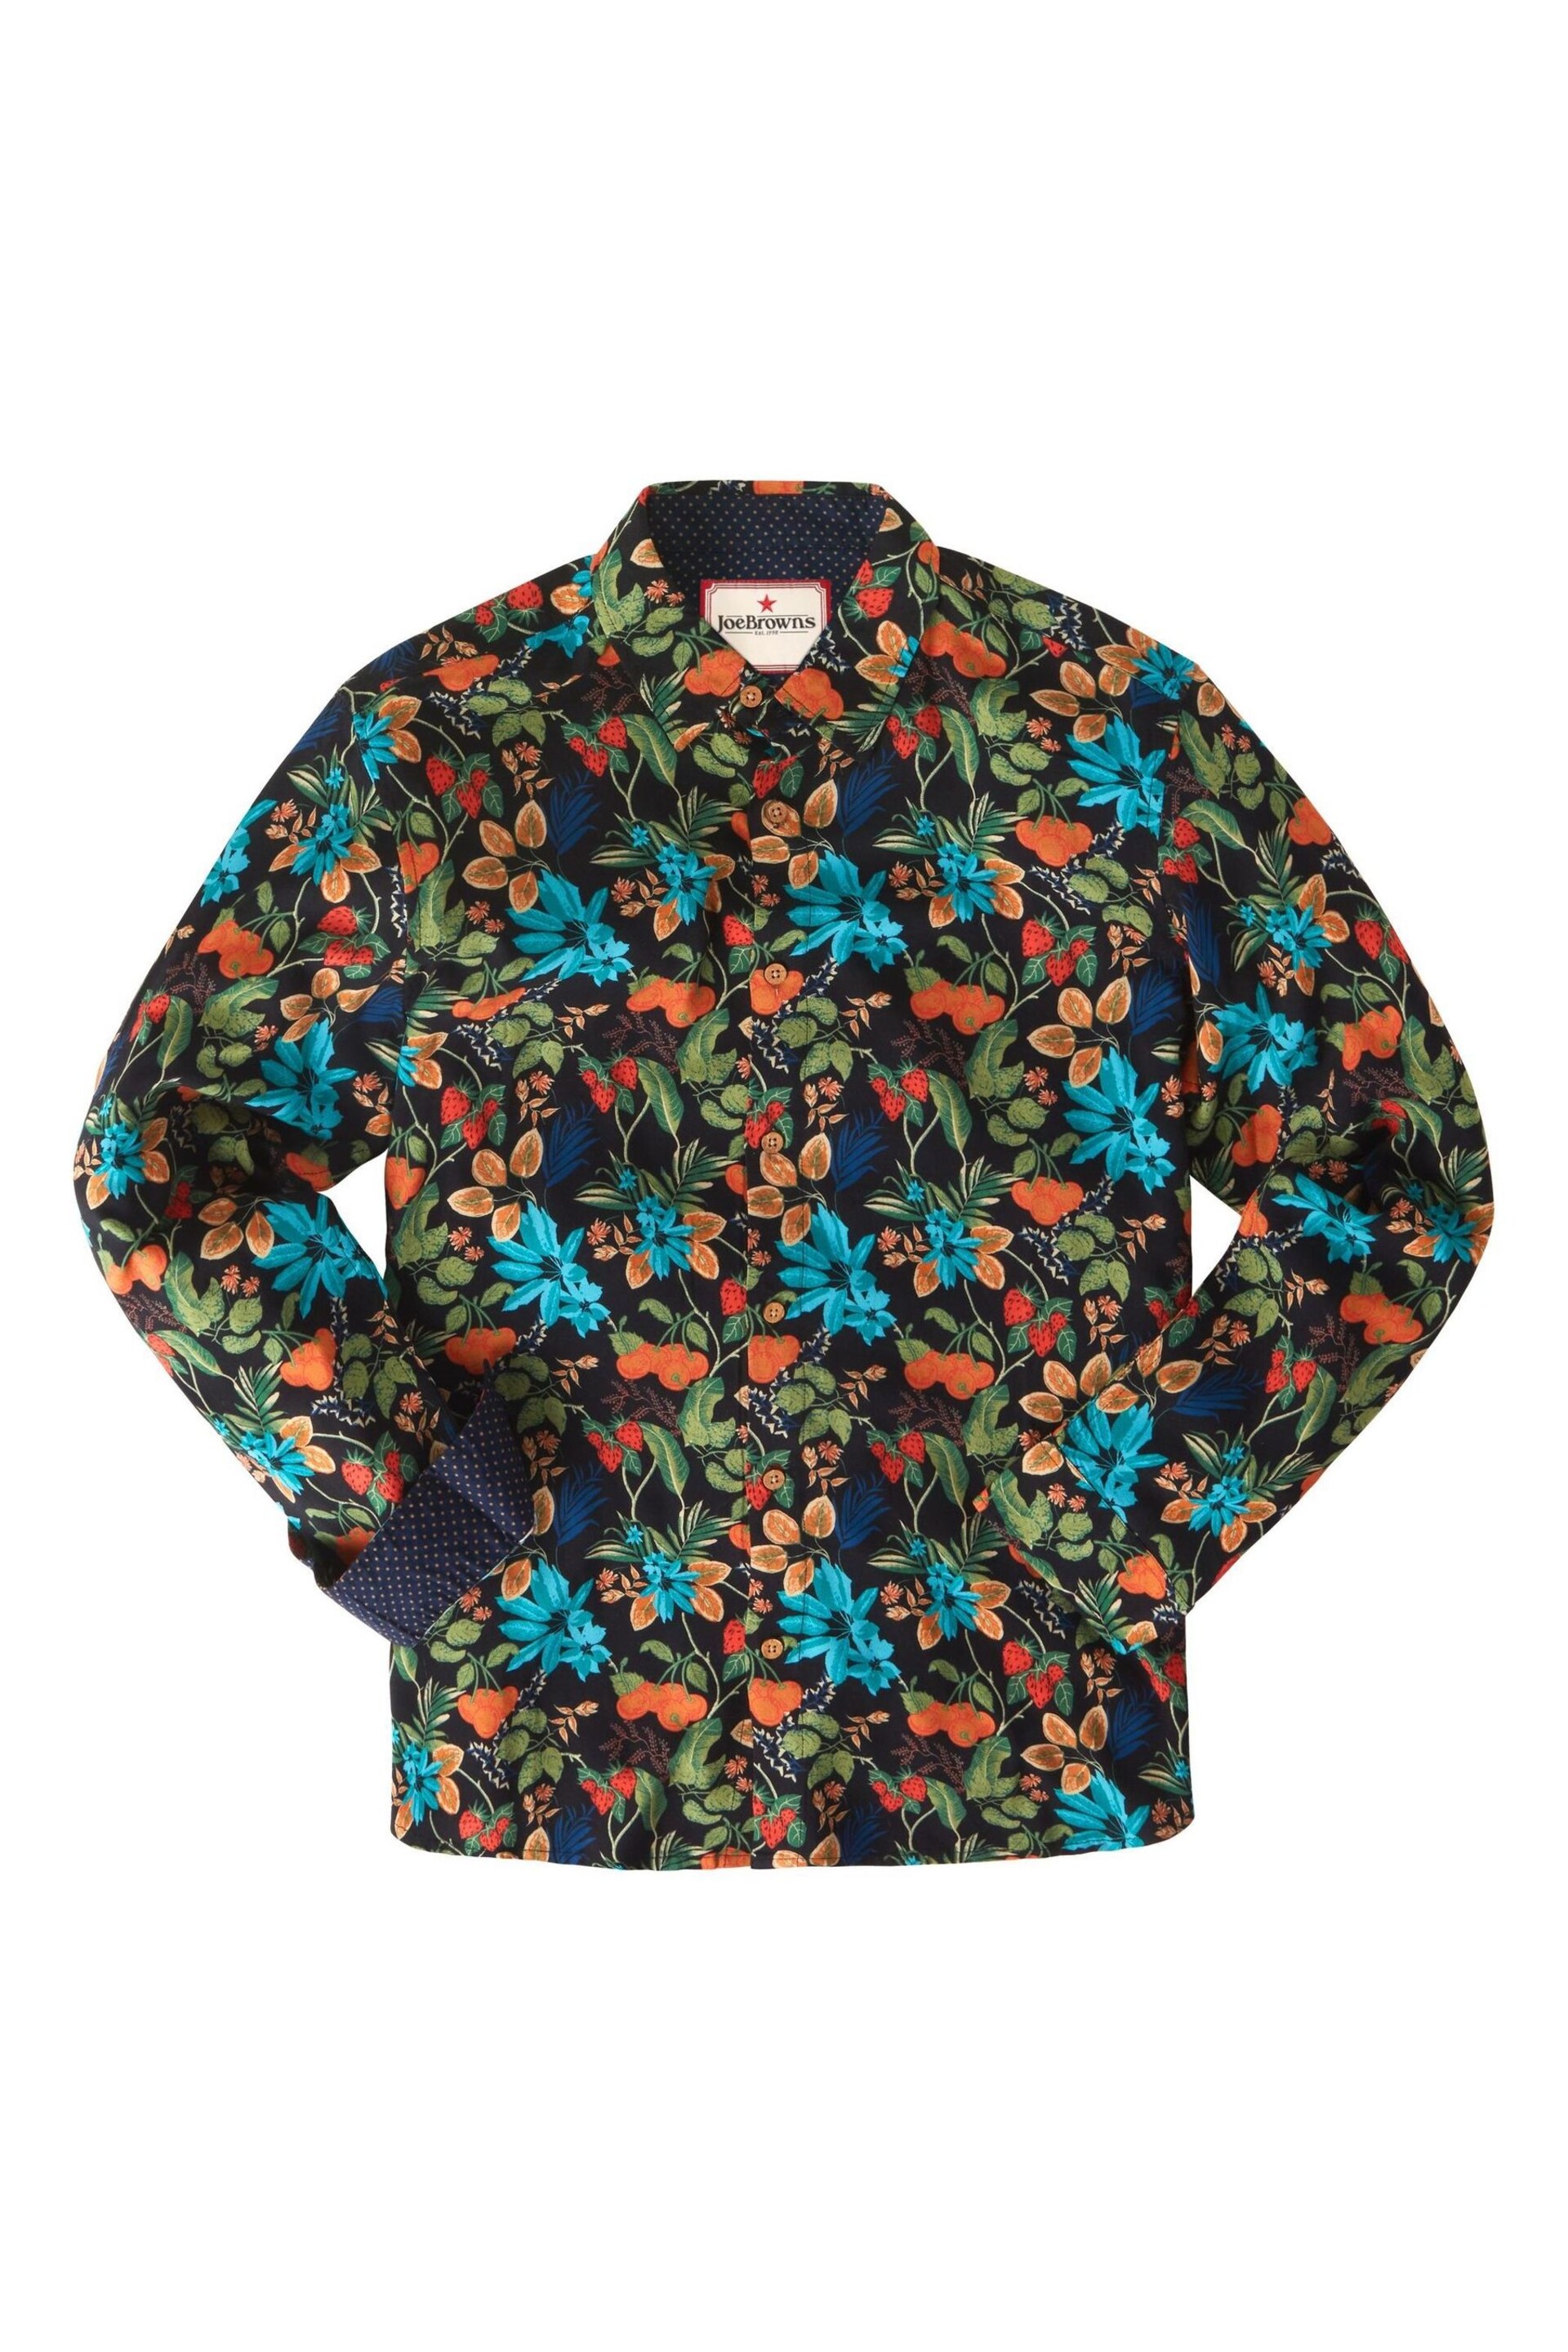 Joe Browns Black Fruit Floral Print Collared Shirt - Image 7 of 7